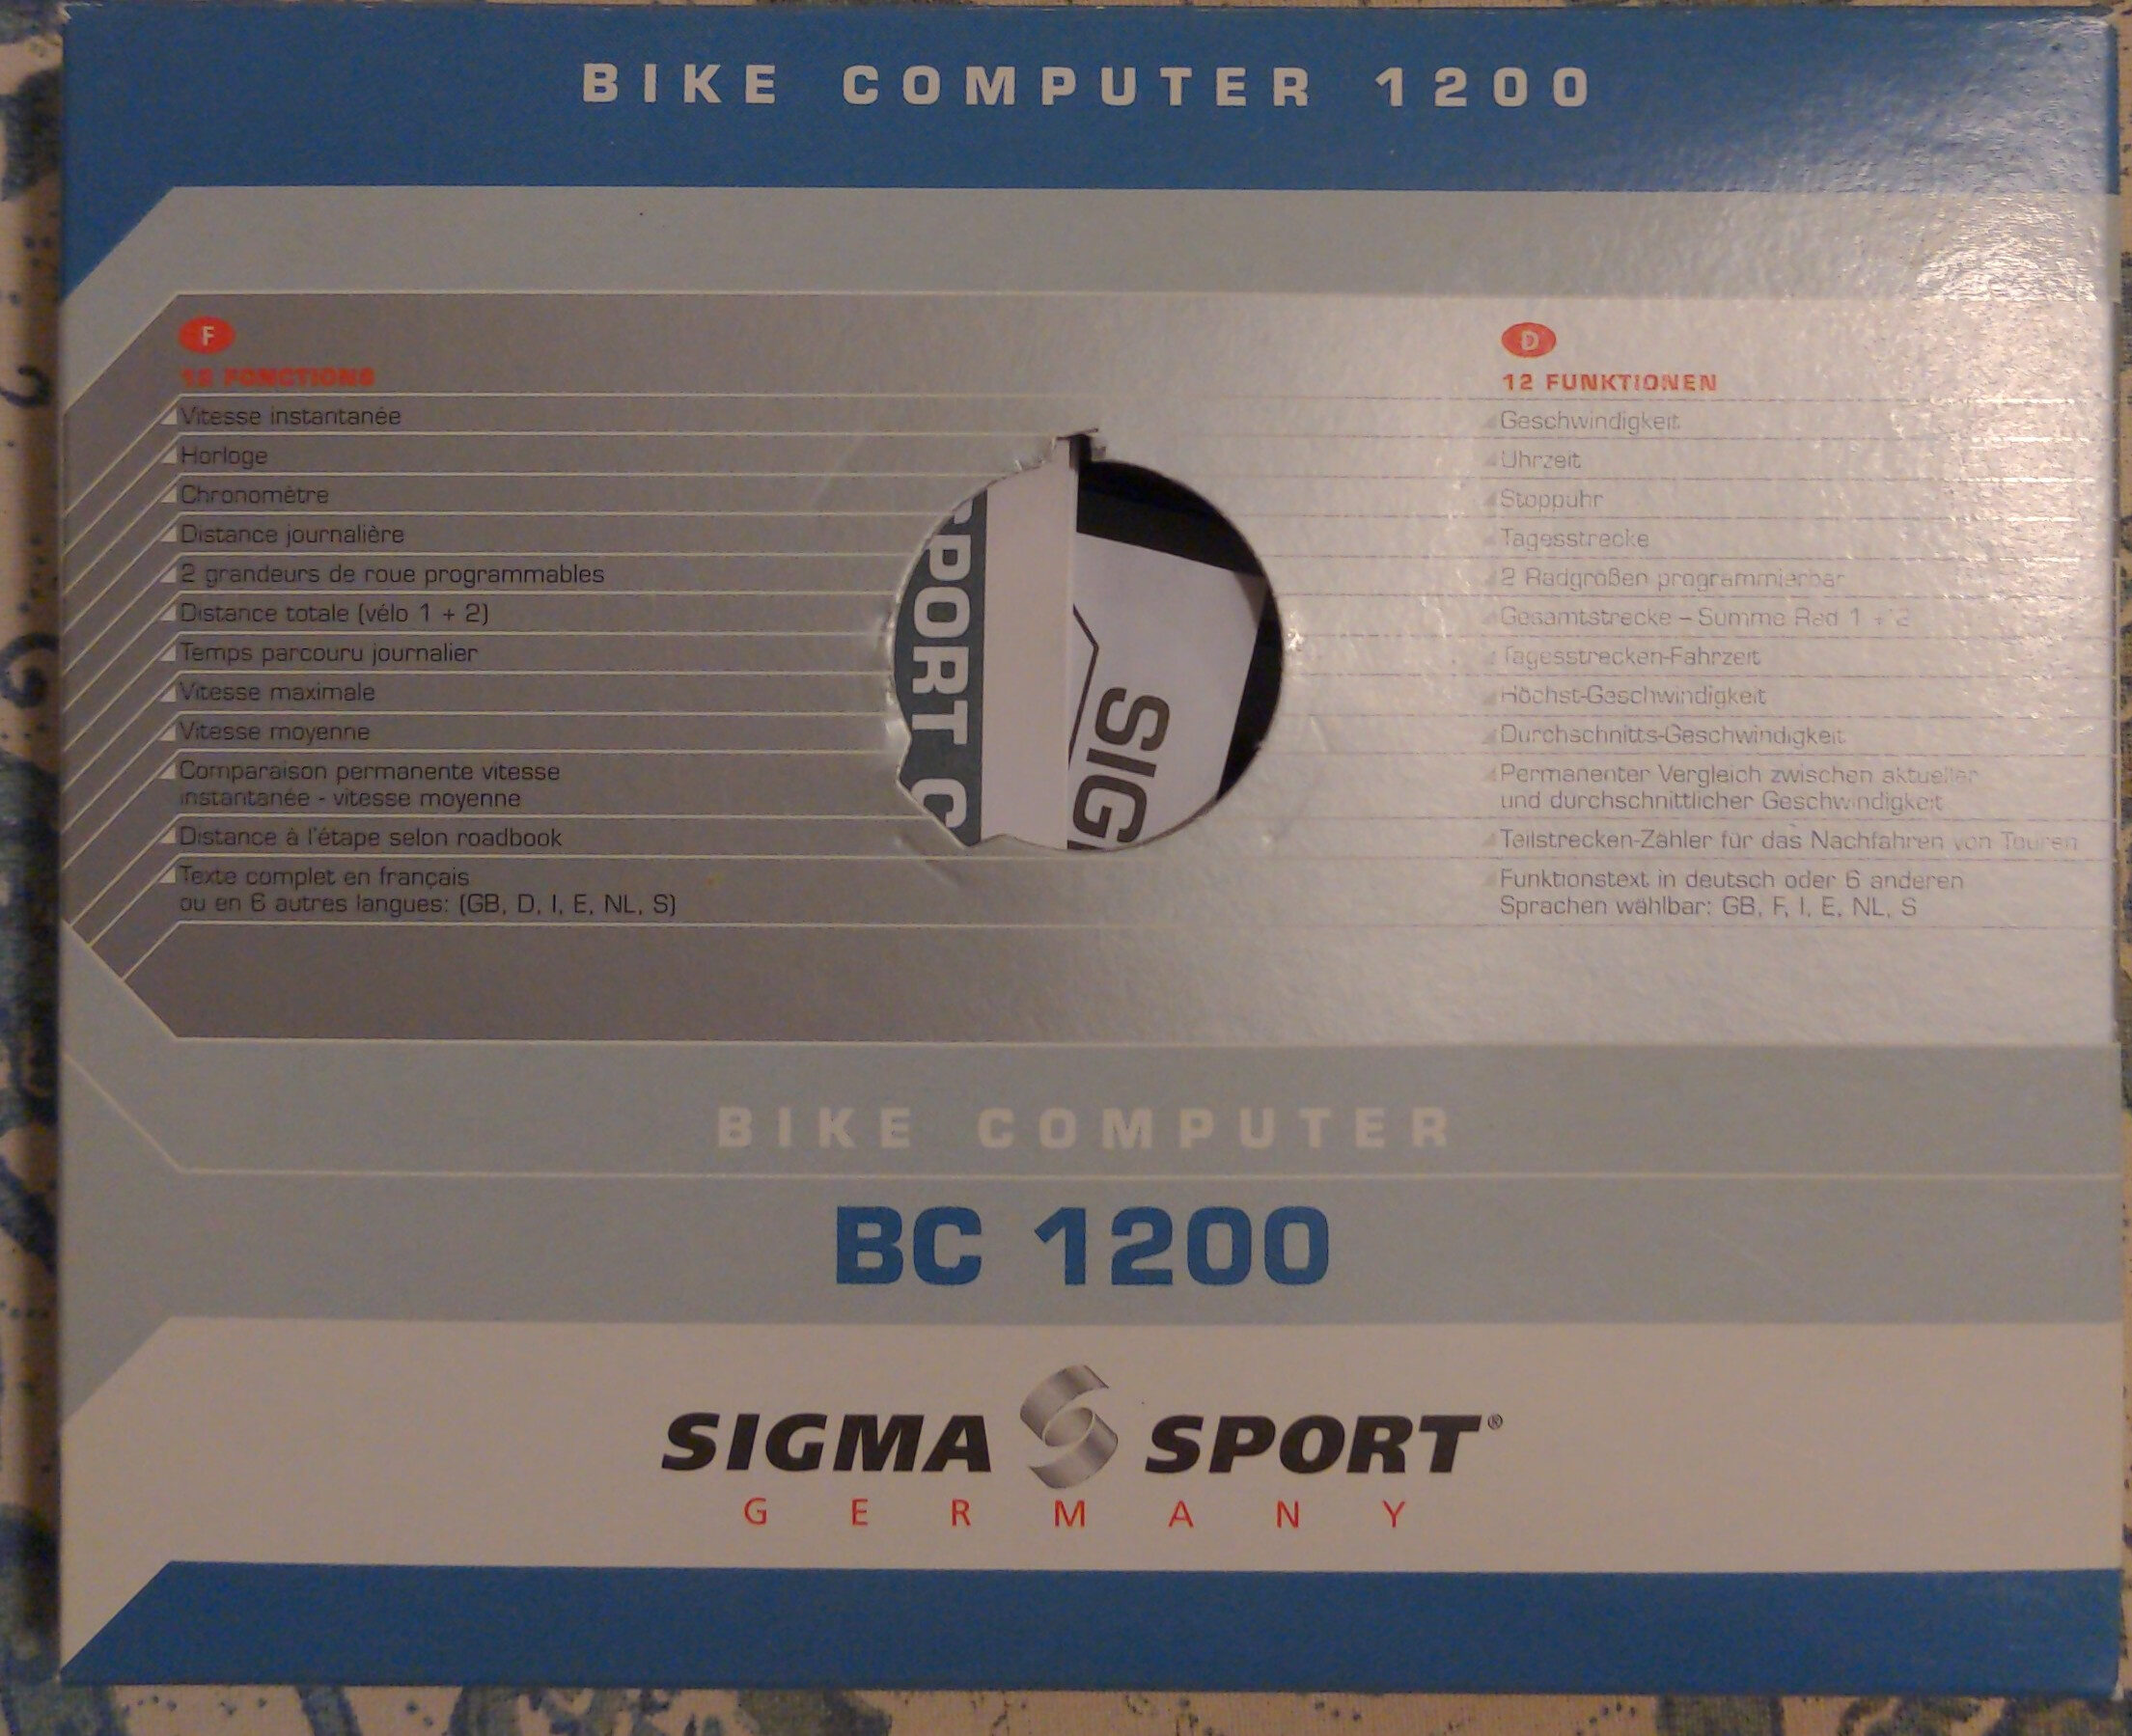 Bike computer 1200 - Produit - fr